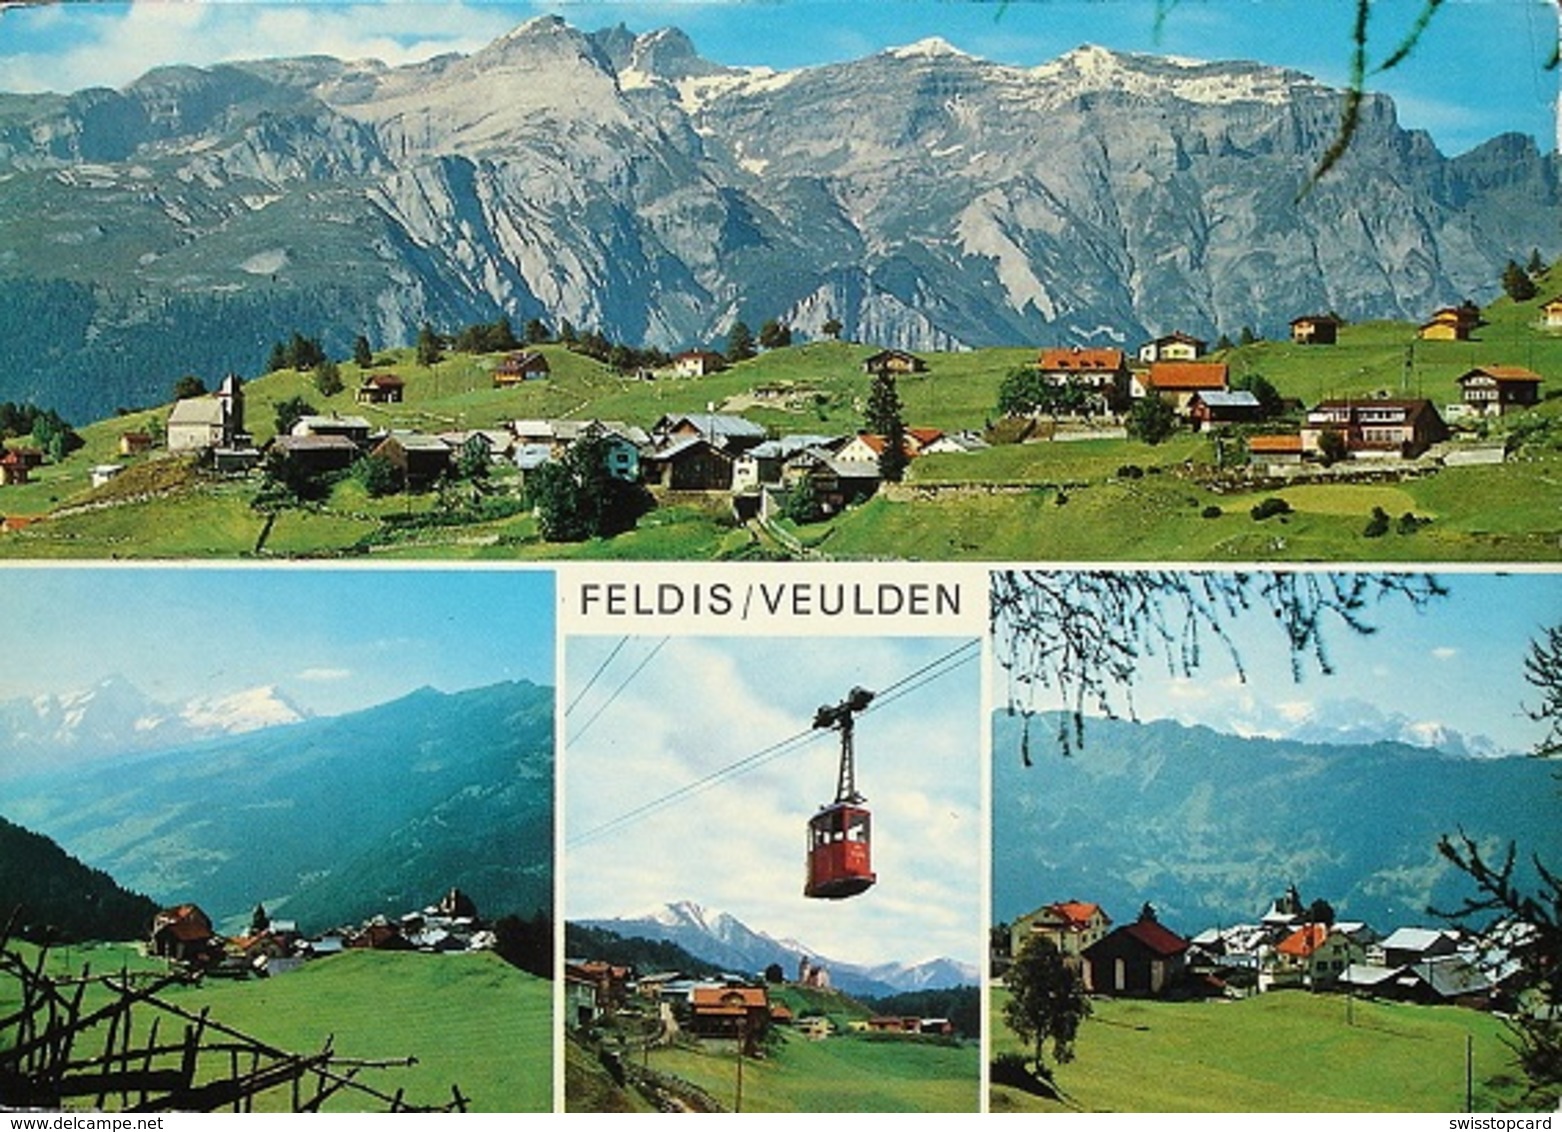 FELDIS VEULDEN Luftseilbahn - Feldis/Veulden